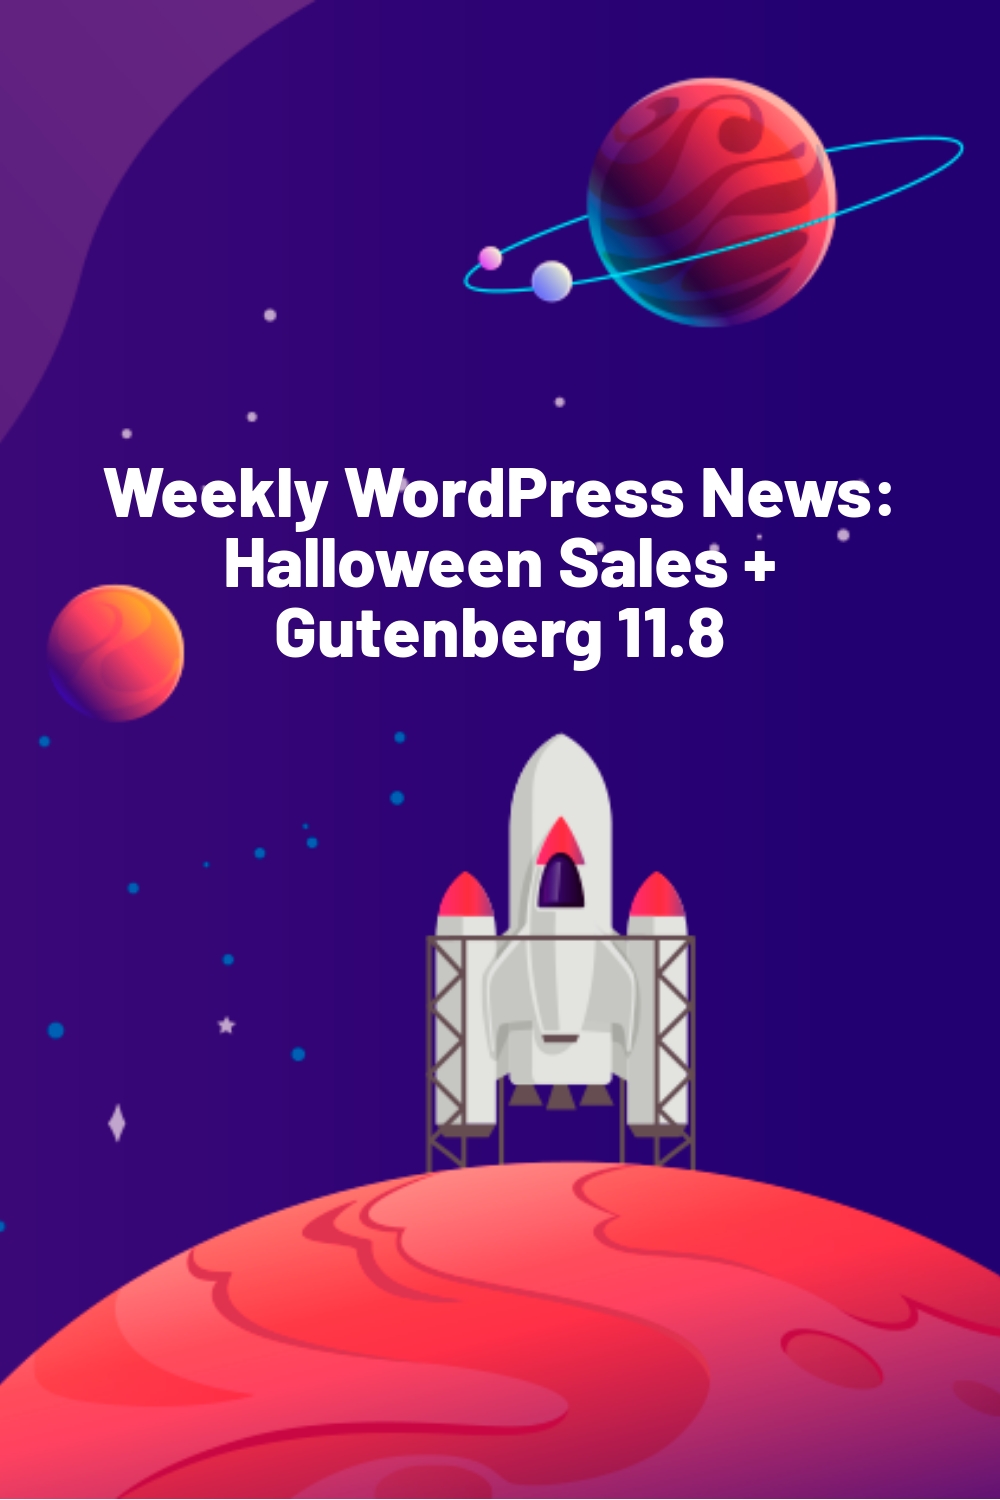 Weekly WordPress News:  Halloween Sales + Gutenberg 11.8